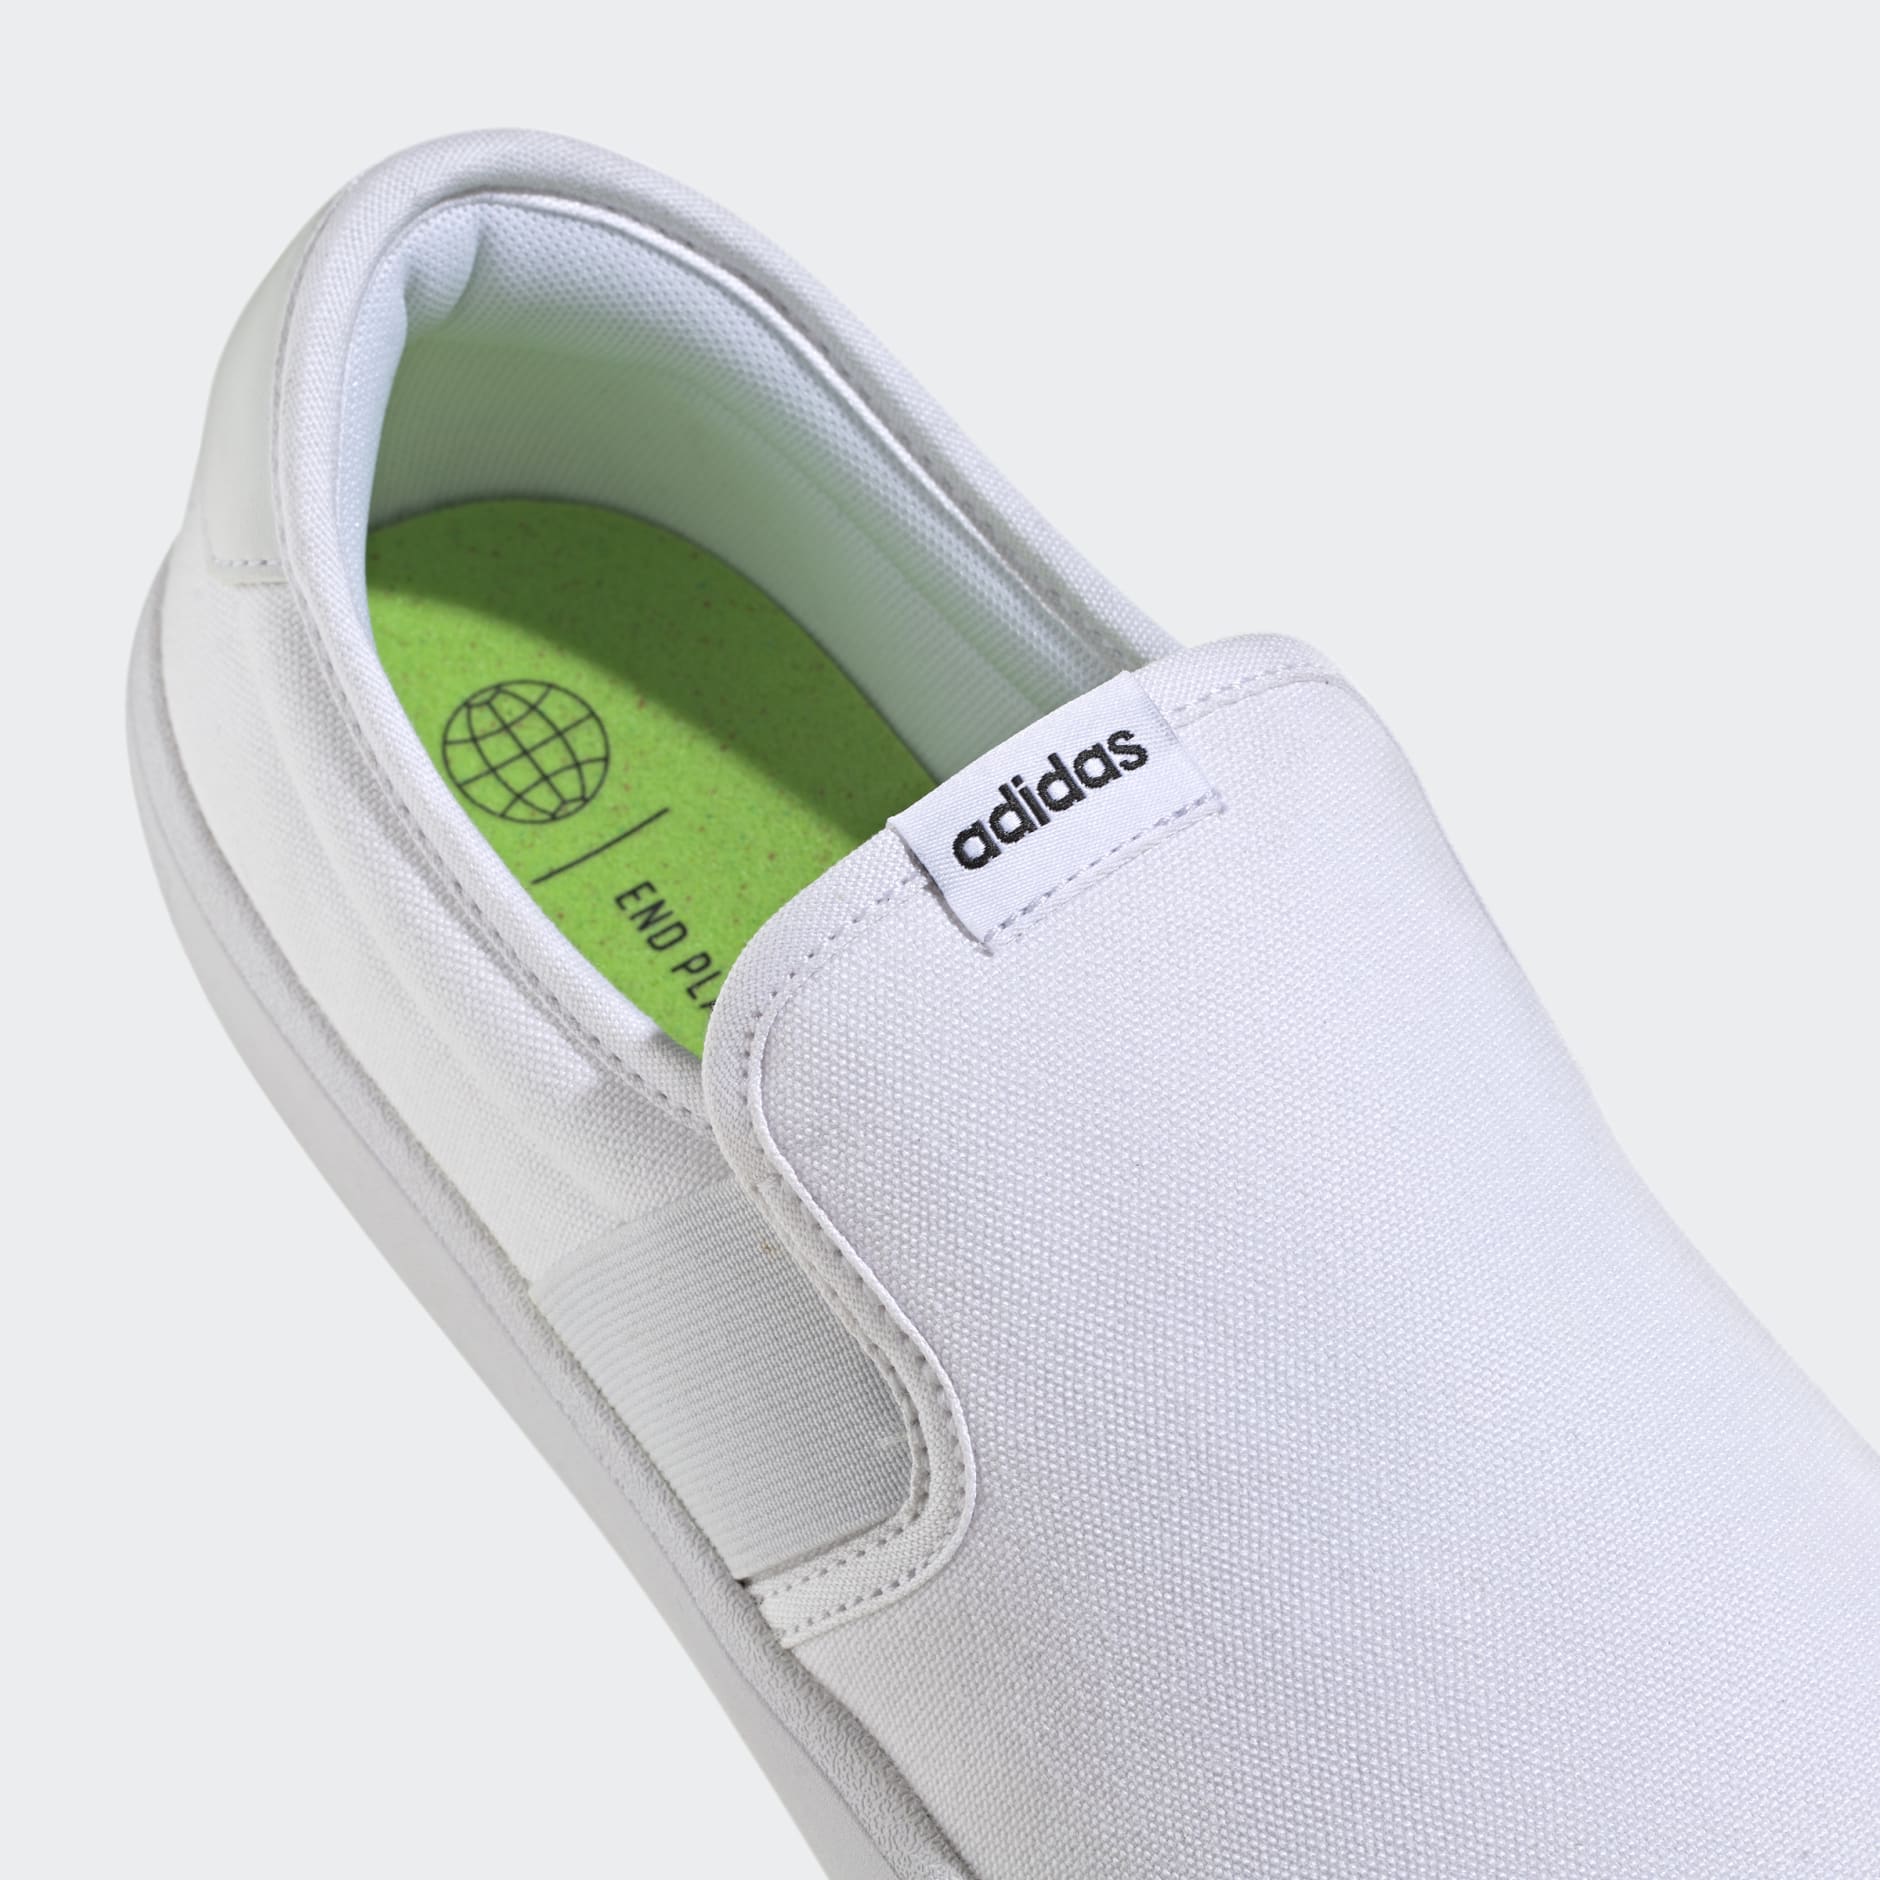 adidas VULC RAID3R Lifestyle Skateboarding Slip-On Canvas Shoes - White